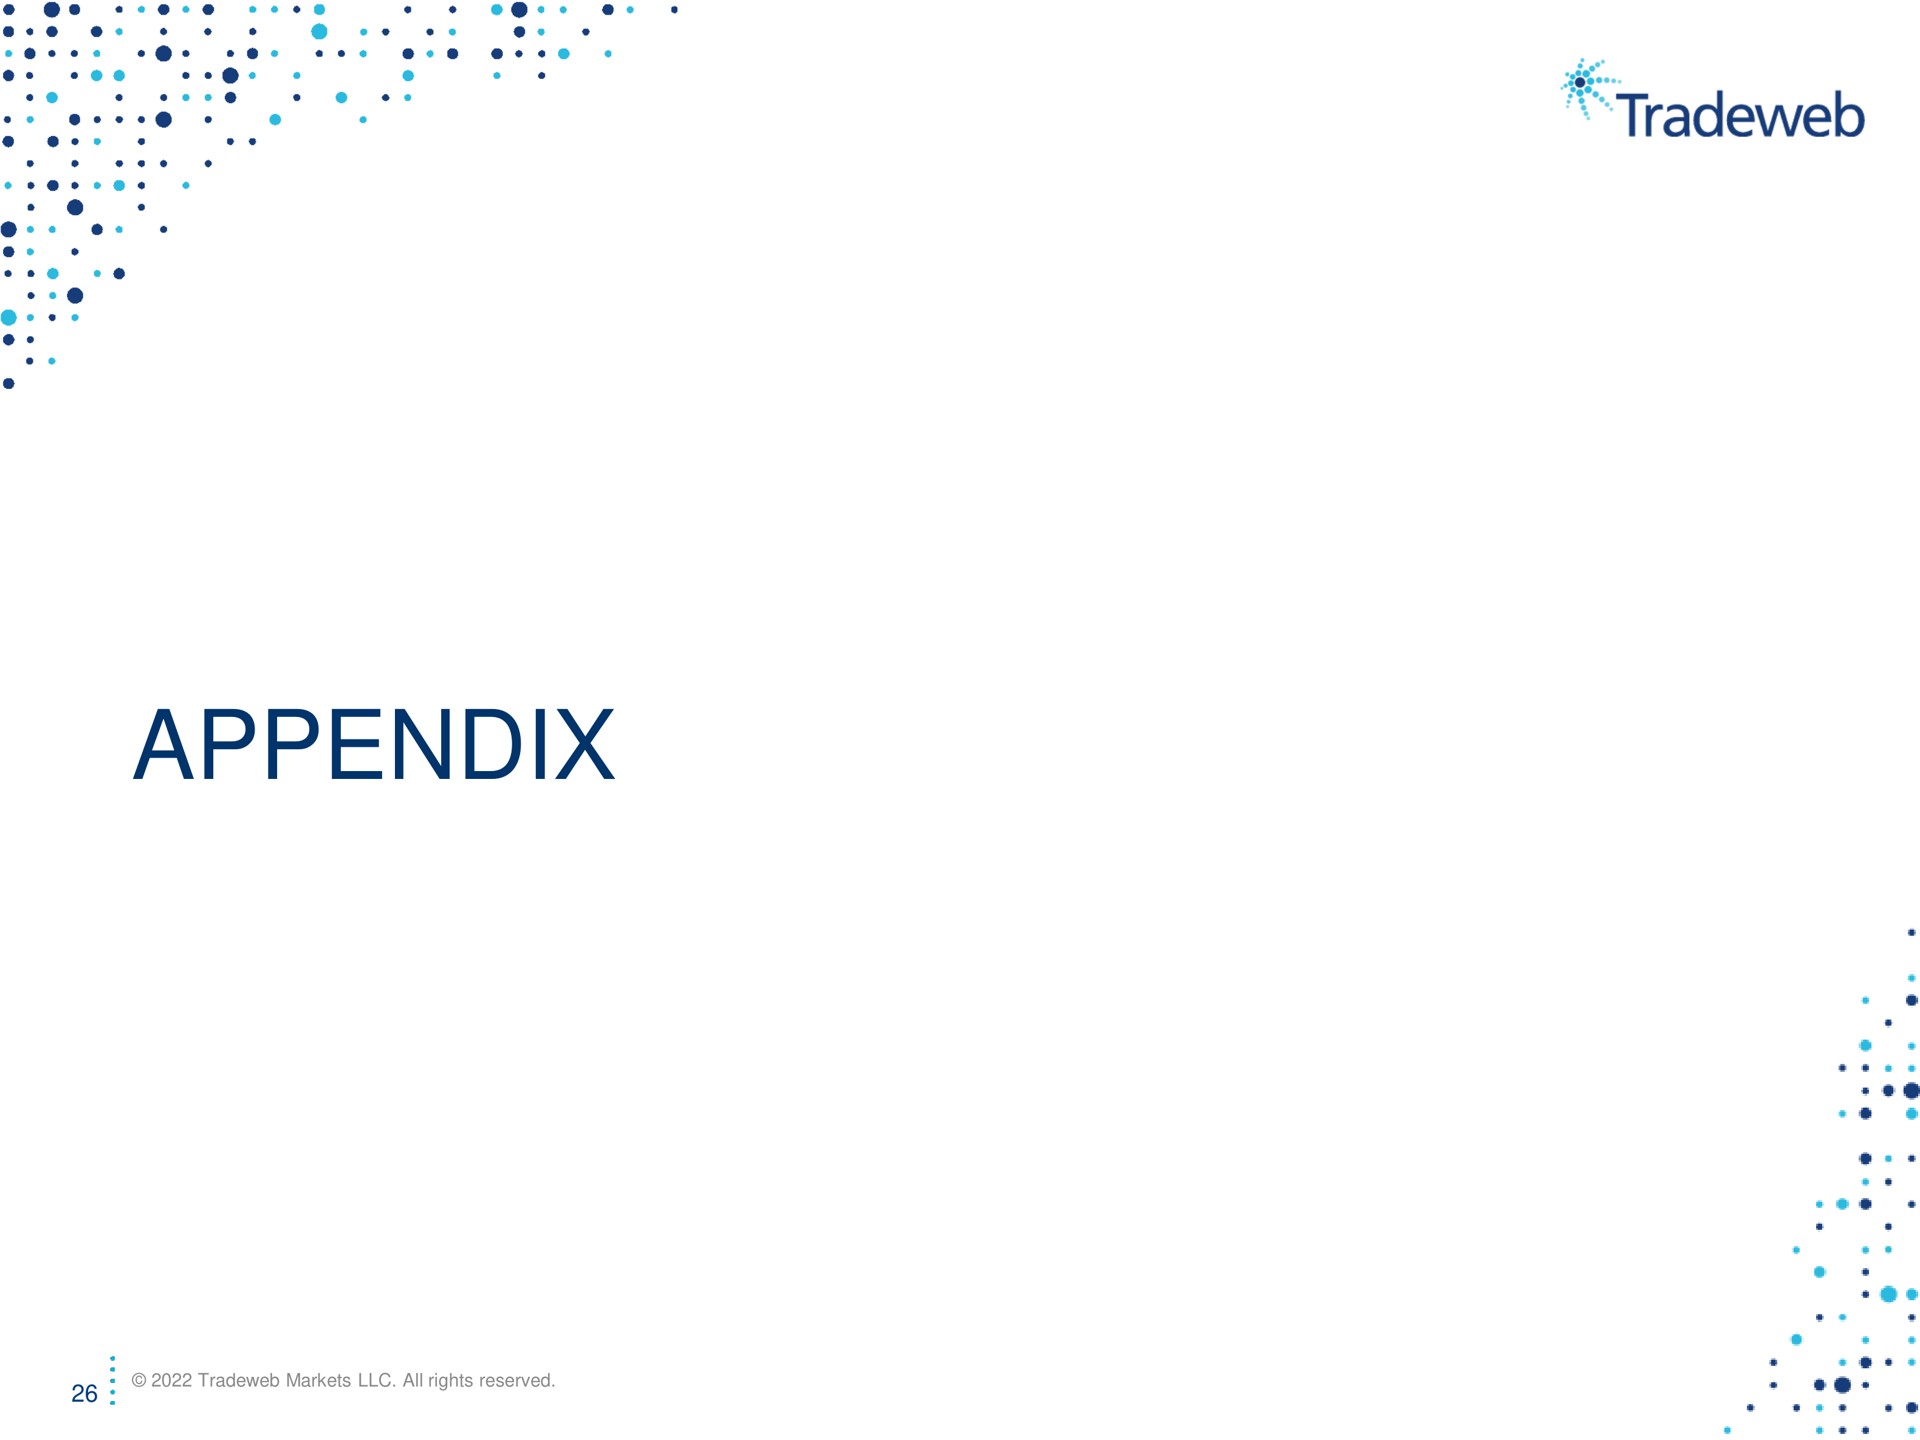 appendix | Tradeweb